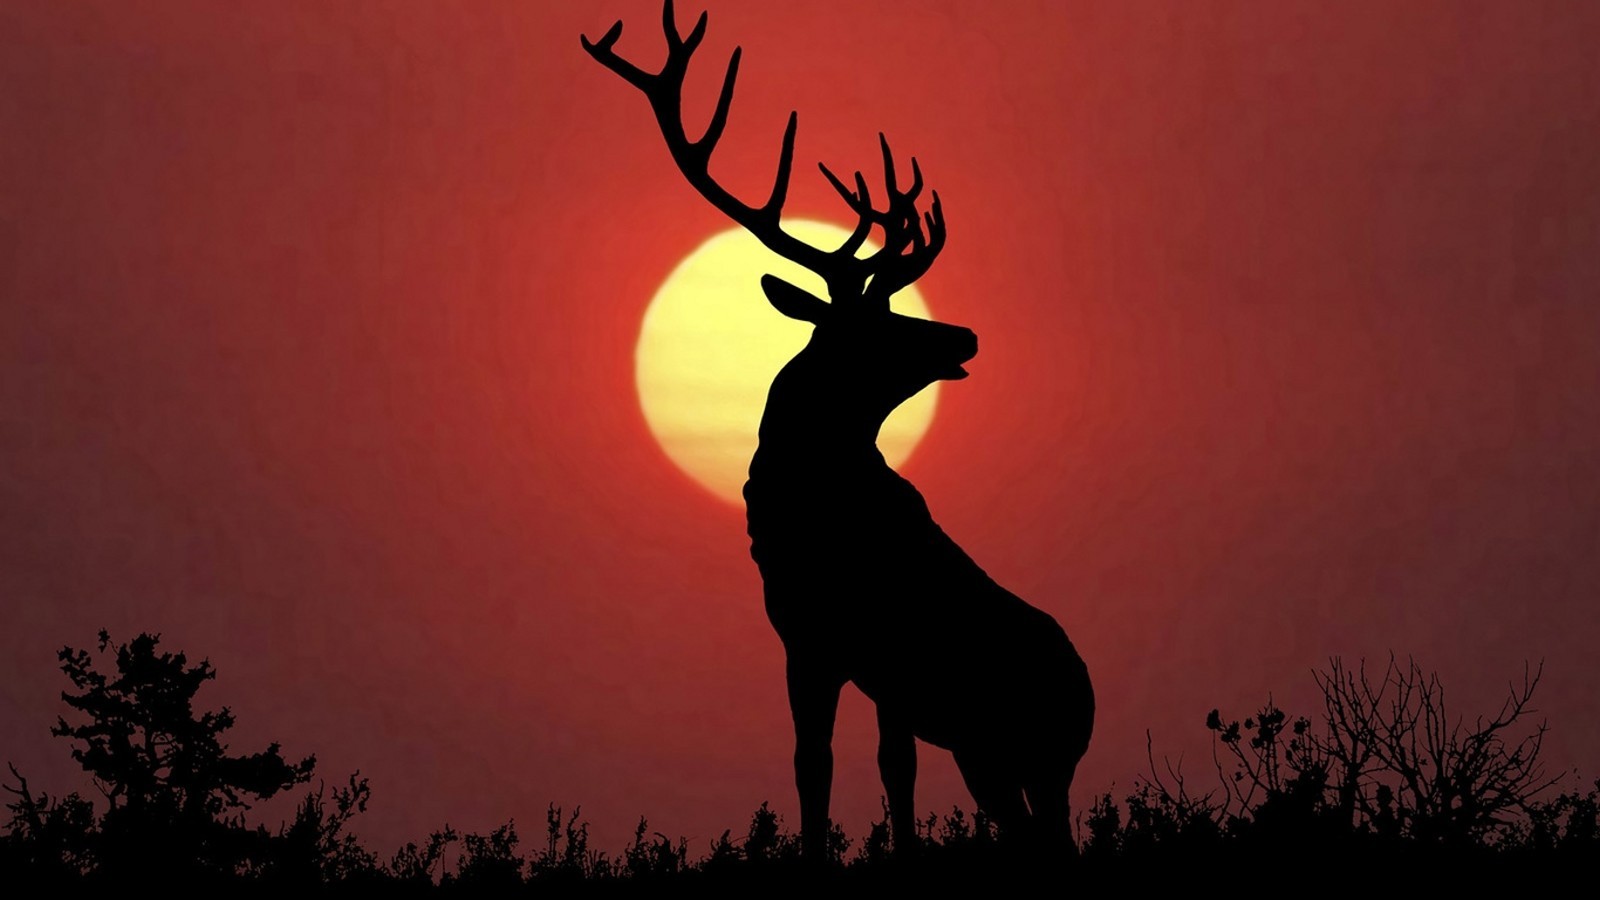 General 1600x900 animals nature deer Sun red silhouette wildlife stags antlers mammals elk red sky